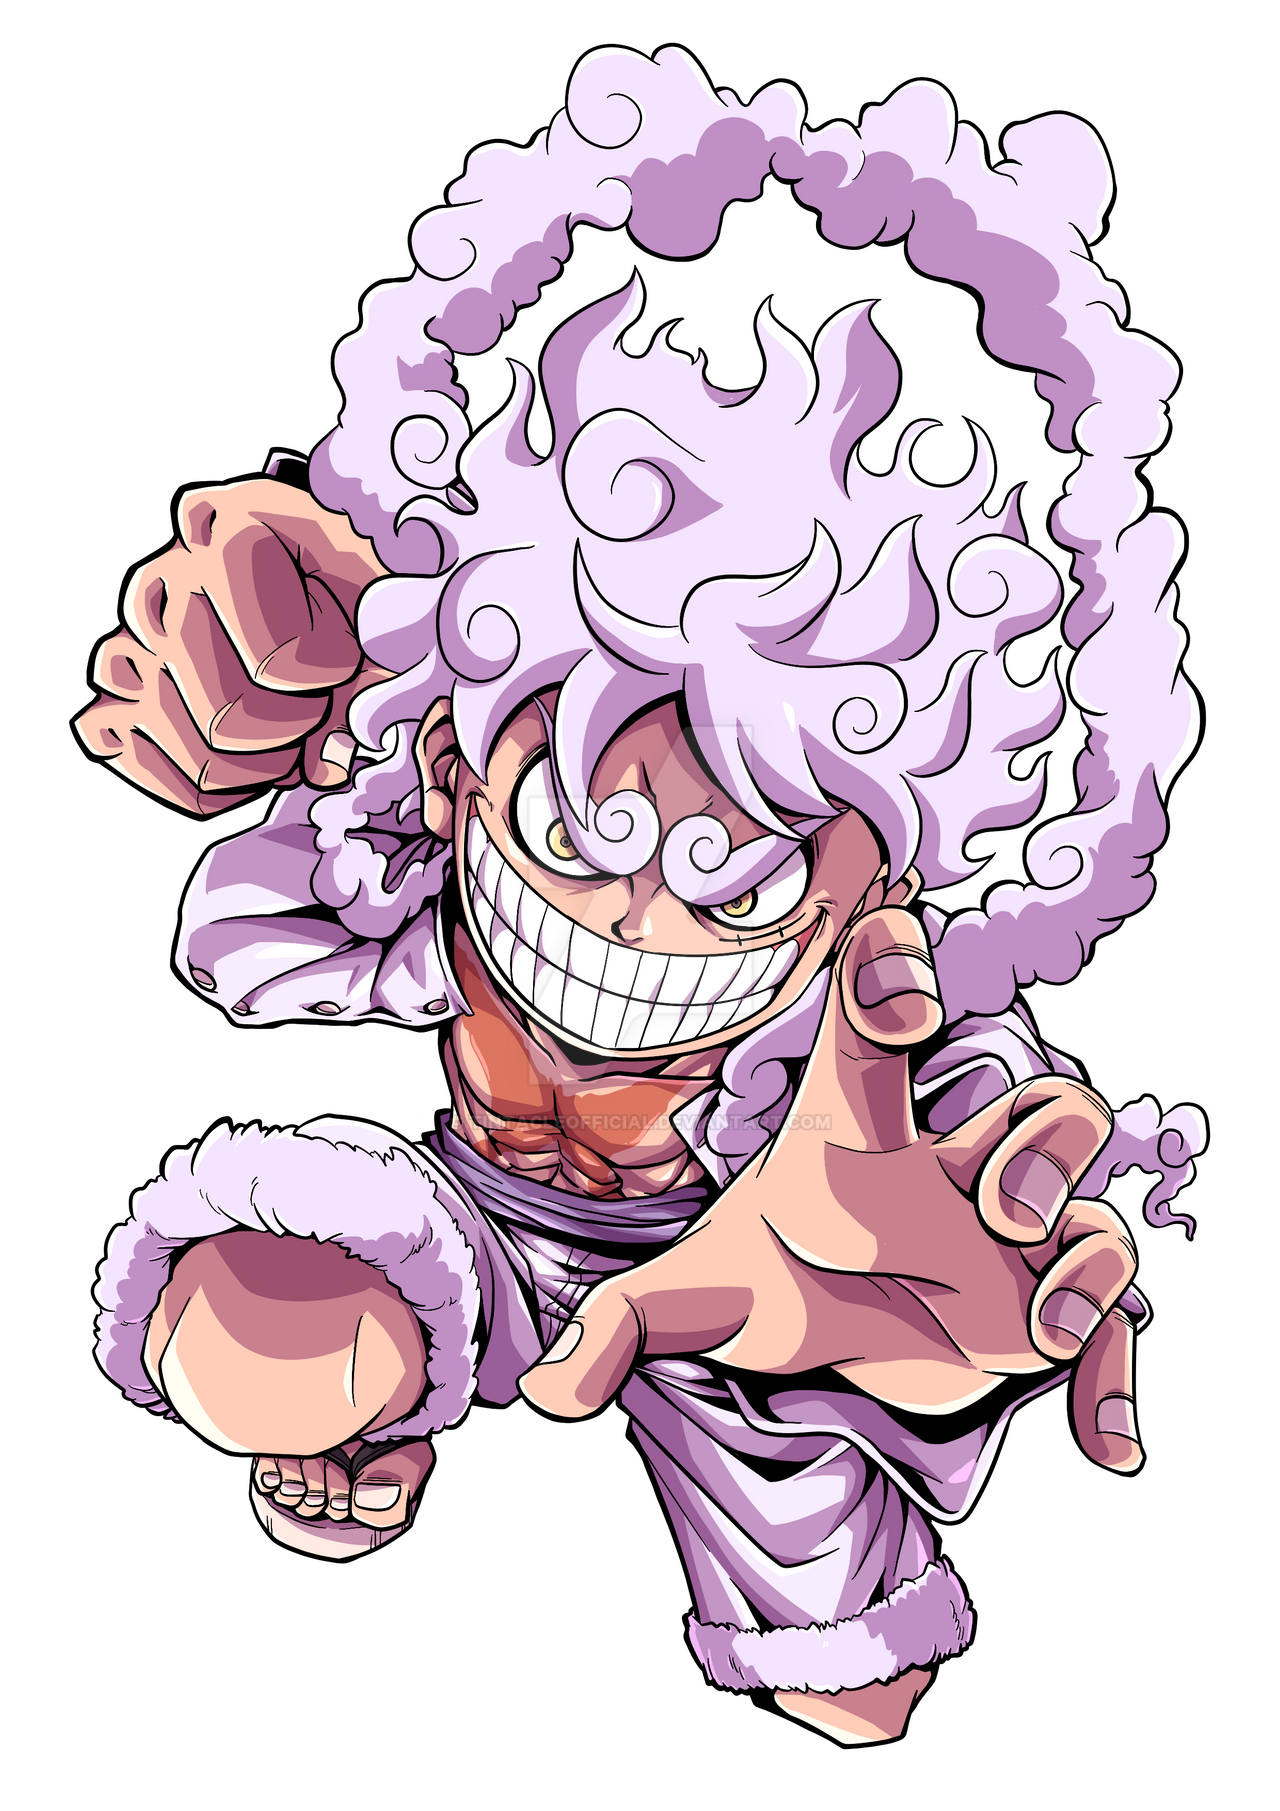 Monkey D Luffy - Nika - One Piece 1045 by caiquenadal on DeviantArt